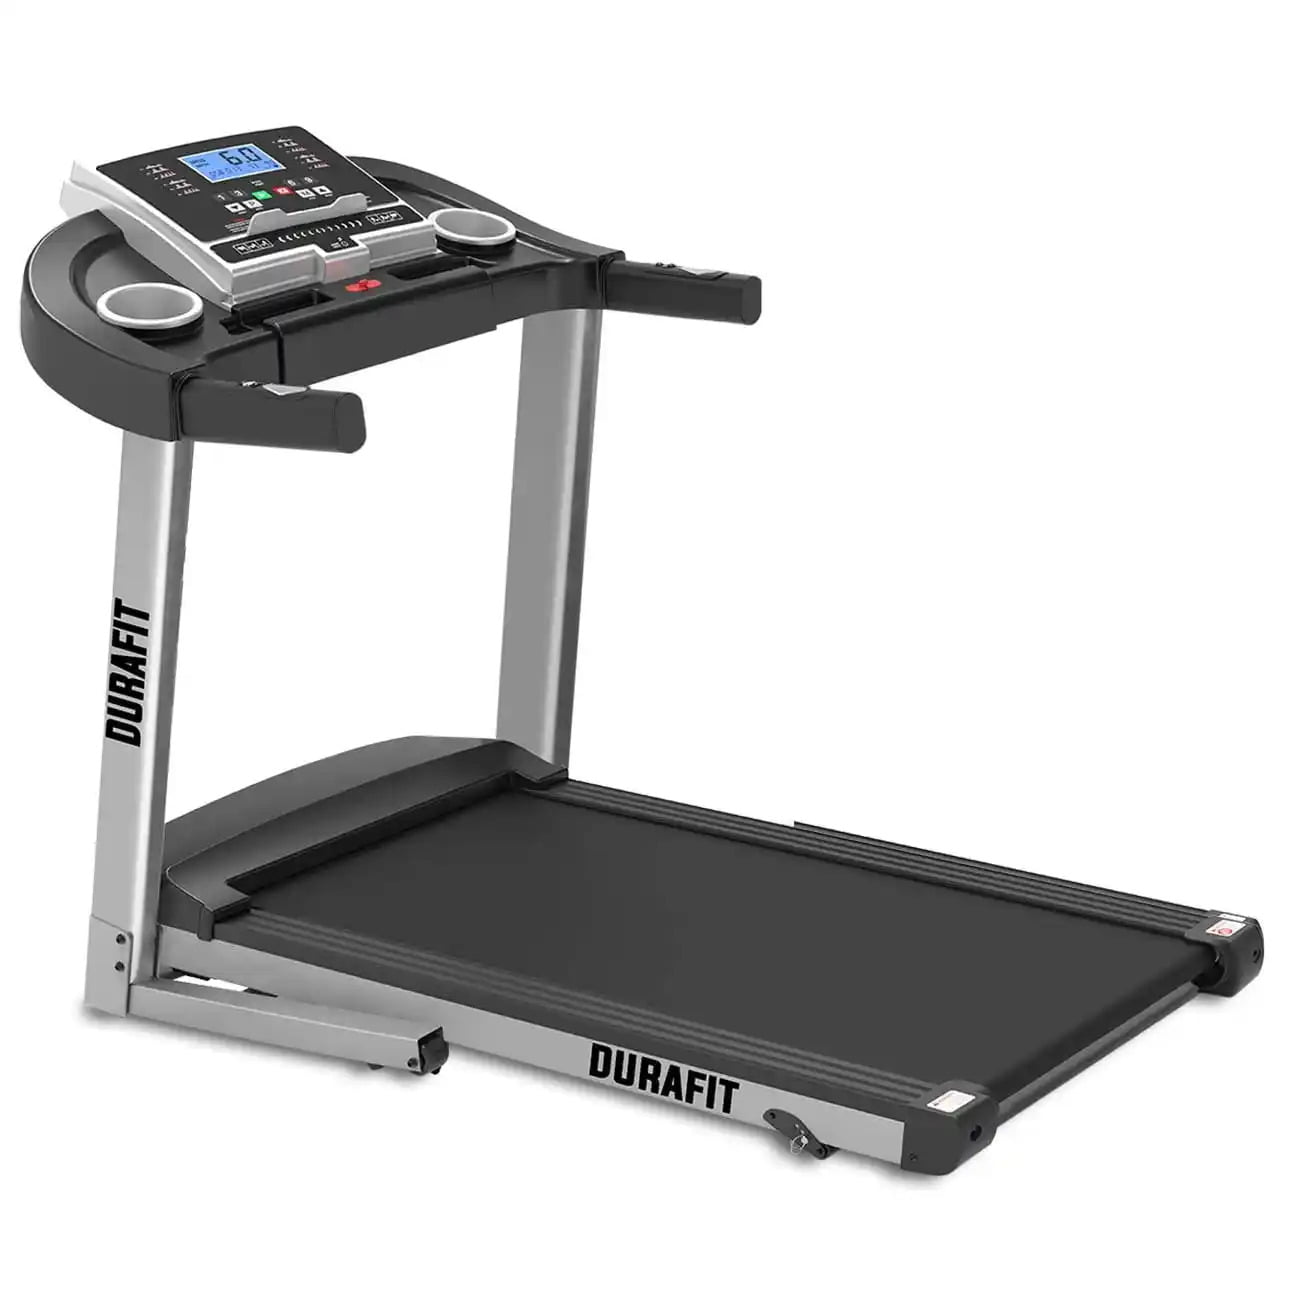 Durafit Strong treadmill